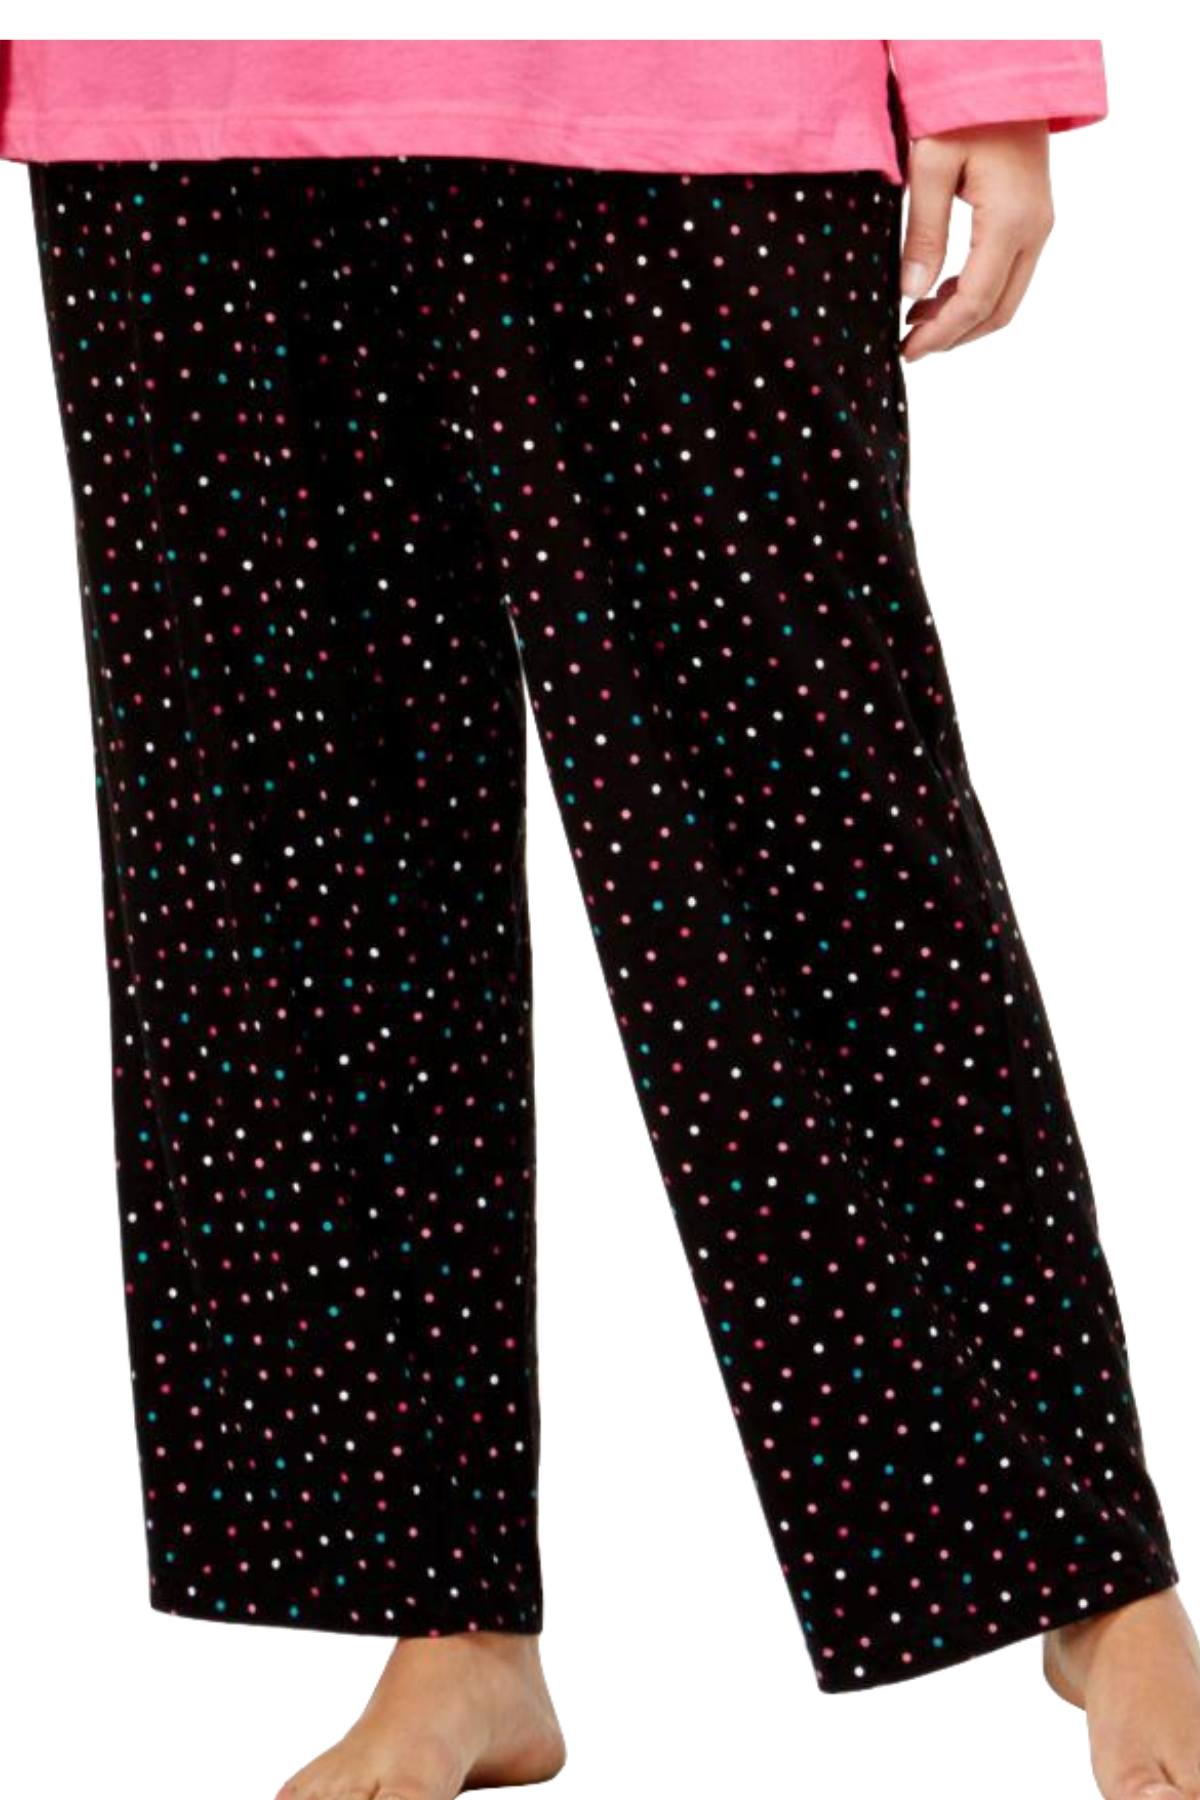 Charter Club Intimates Pink/Black Multi-Dots Top & Printed Pant Pajama Set